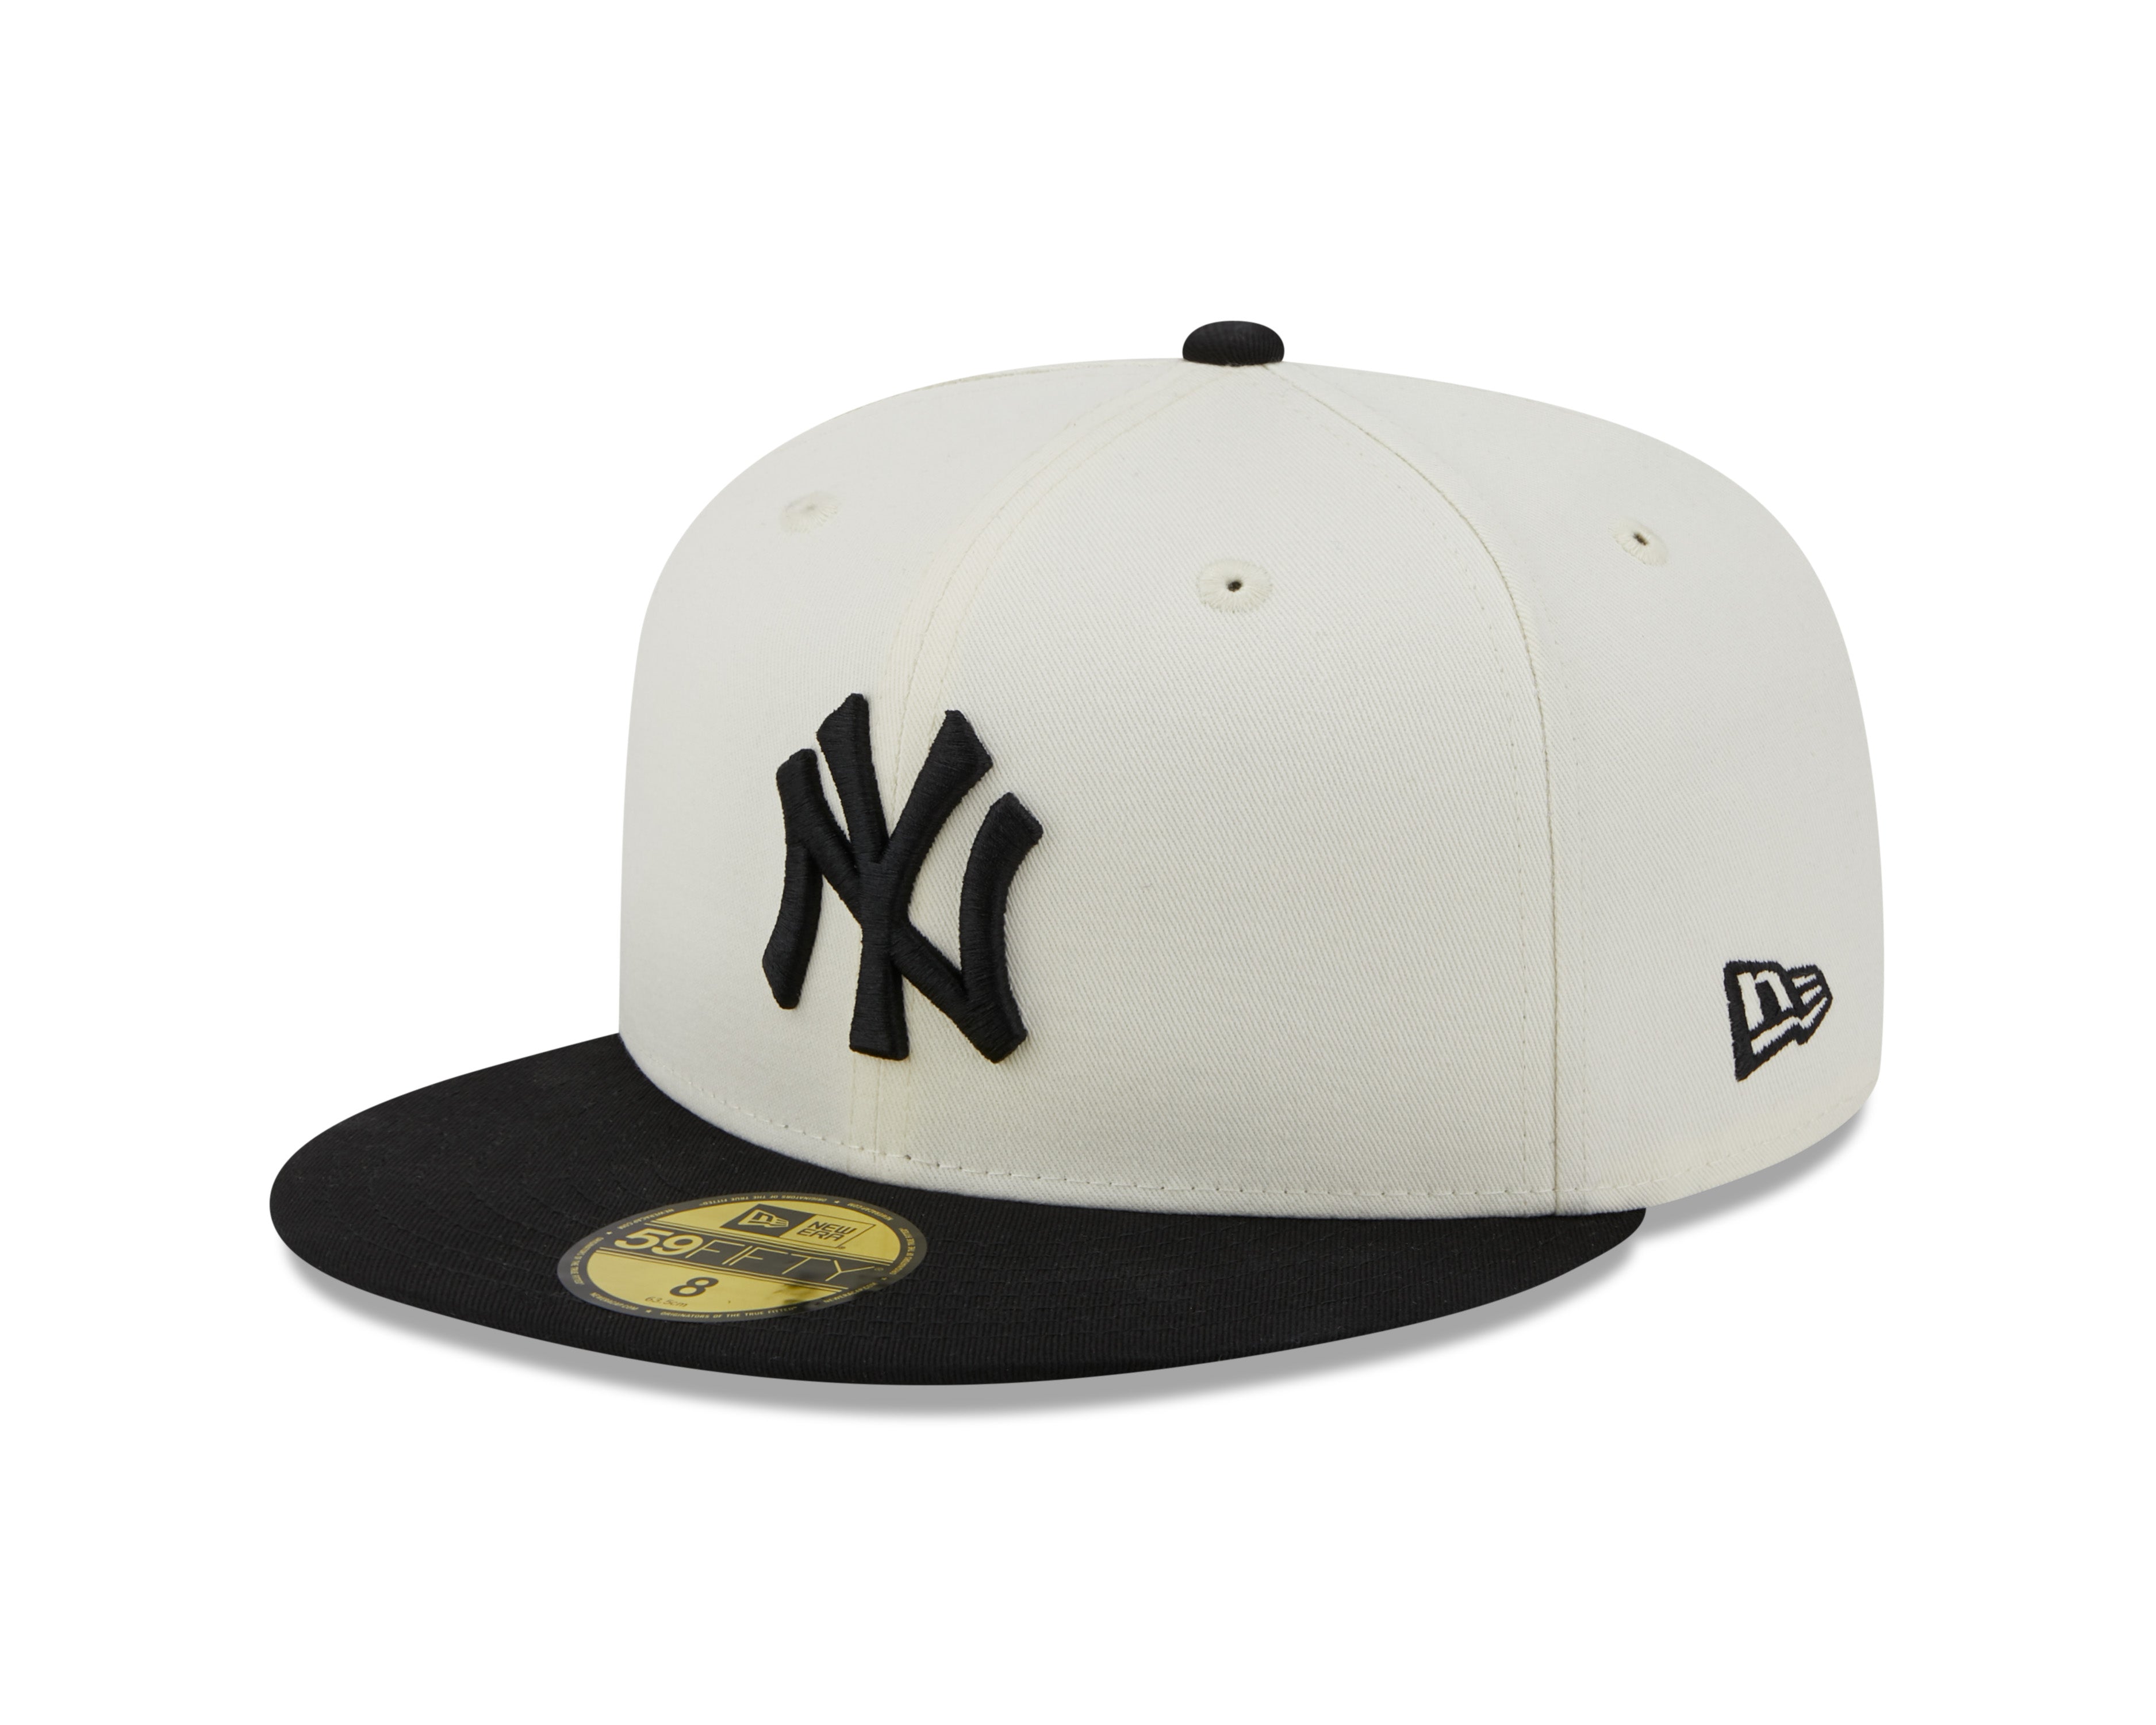 New Era 59Fifty Fitted Cap CHAMPIONSHIPS New York Yankees - White/Black - Headz Up 